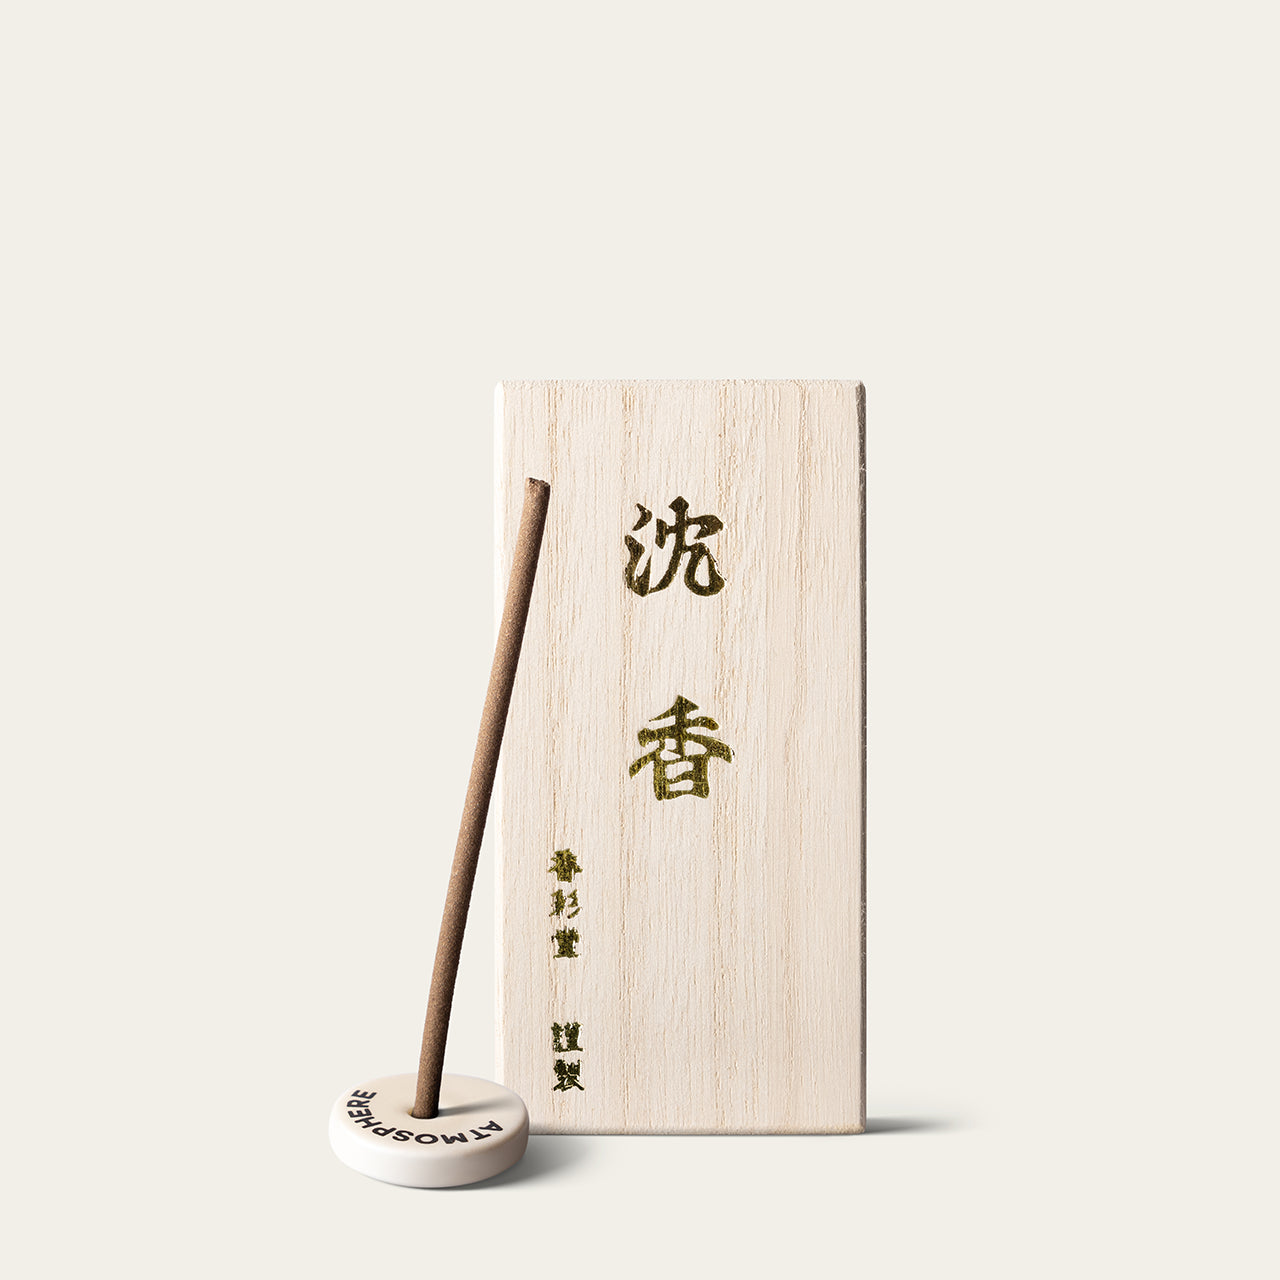 Kousaido Premium Agarwood Supreme Japanese incense sticks (40 sticks) with Atmosphere ceramic incense holder